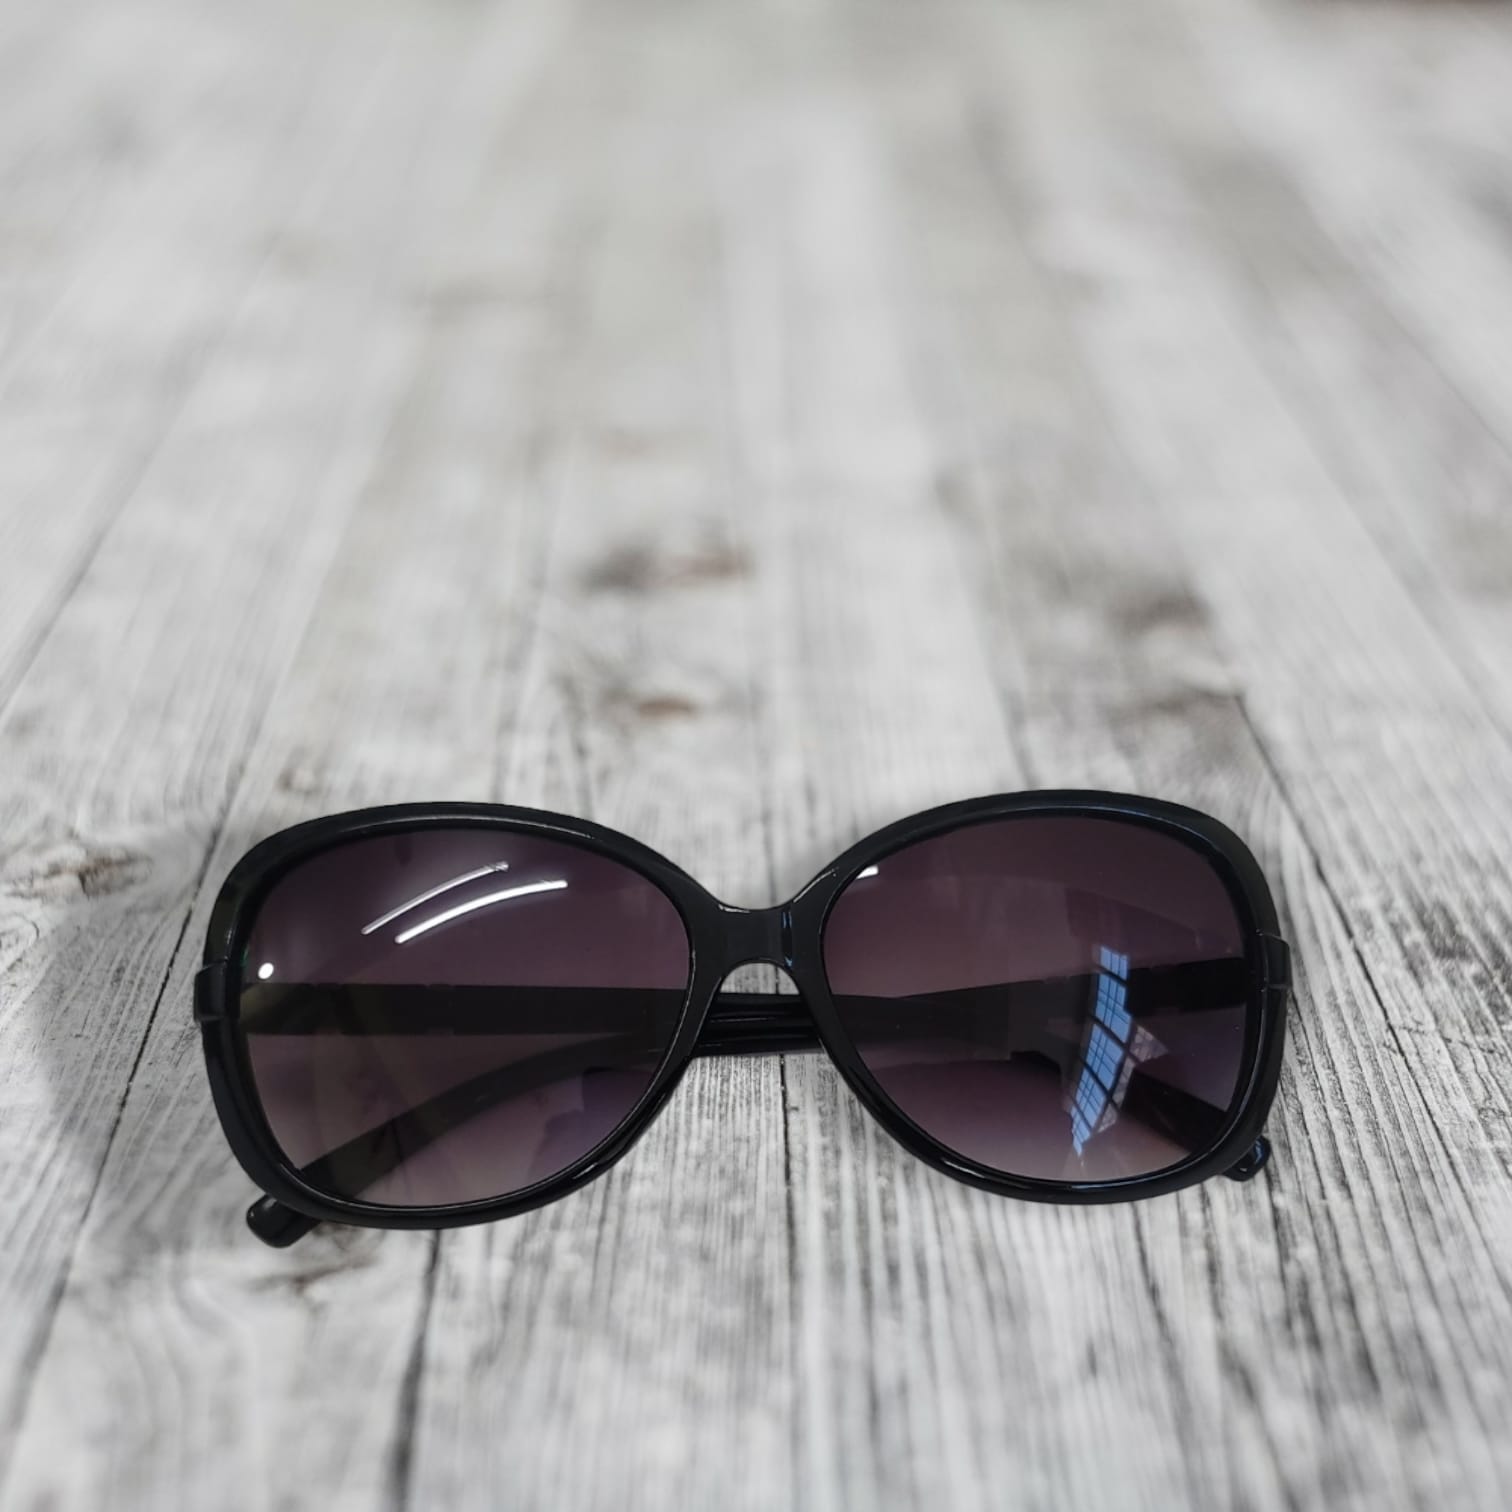 Designed Stylish Sunglasses for Men and Women